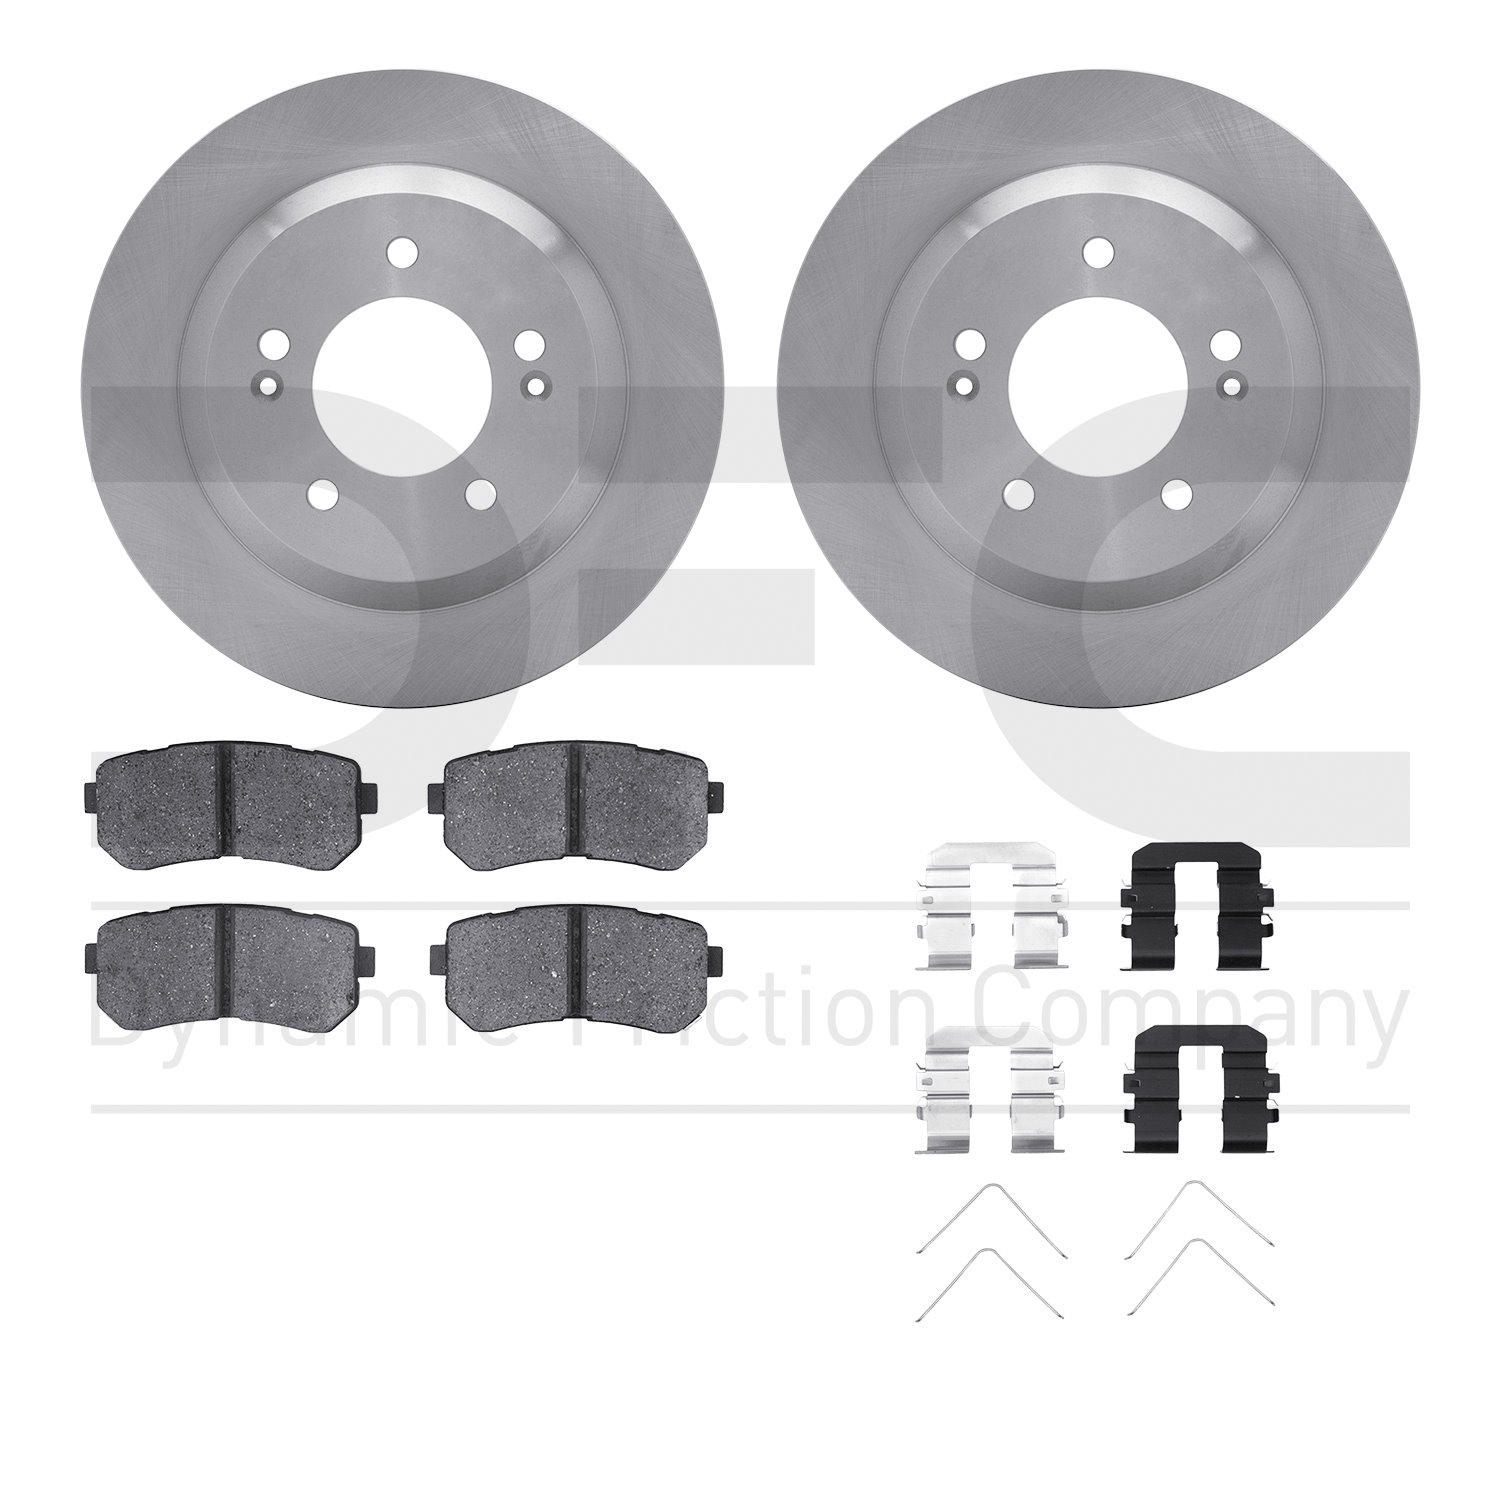 6512-03453 Brake Rotors w/5000 Advanced Brake Pads Kit with Hardware, Fits Select Kia/Hyundai/Genesis, Position: Rear